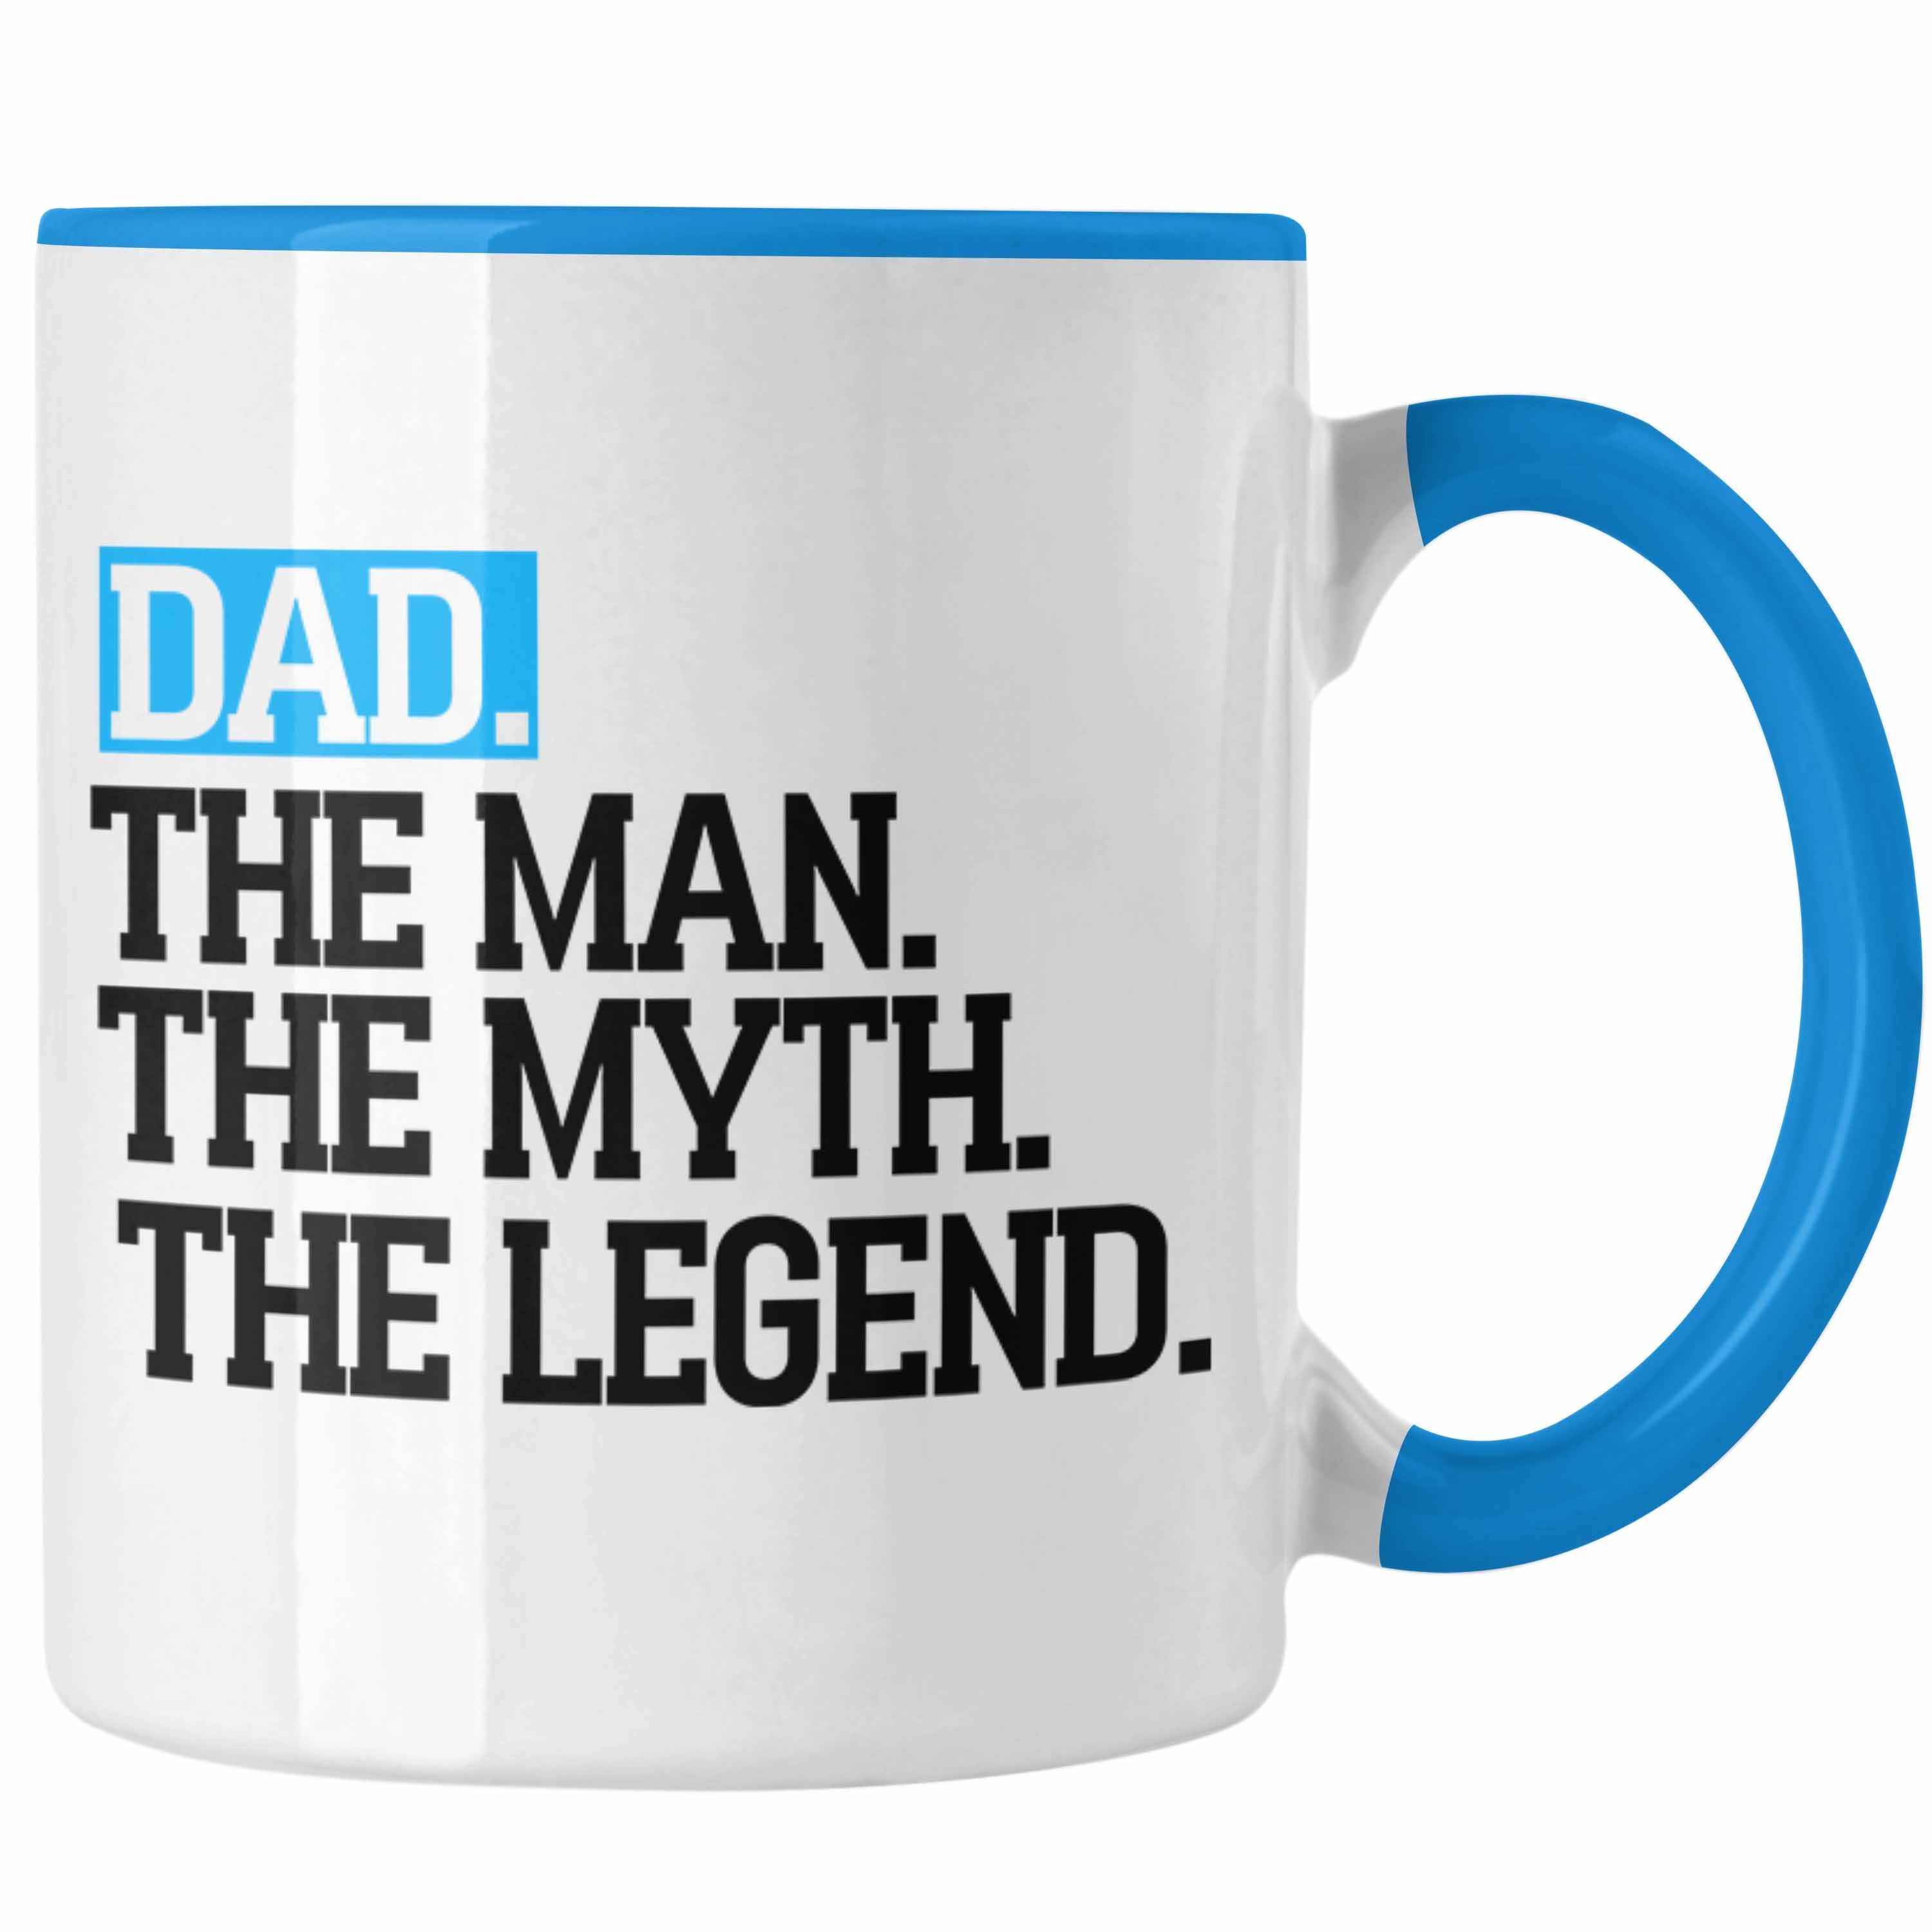 Trendation Tasse Tasse für Vater Lustig "Dad The Man The Myth The Legend" Vatertag Spru Blau